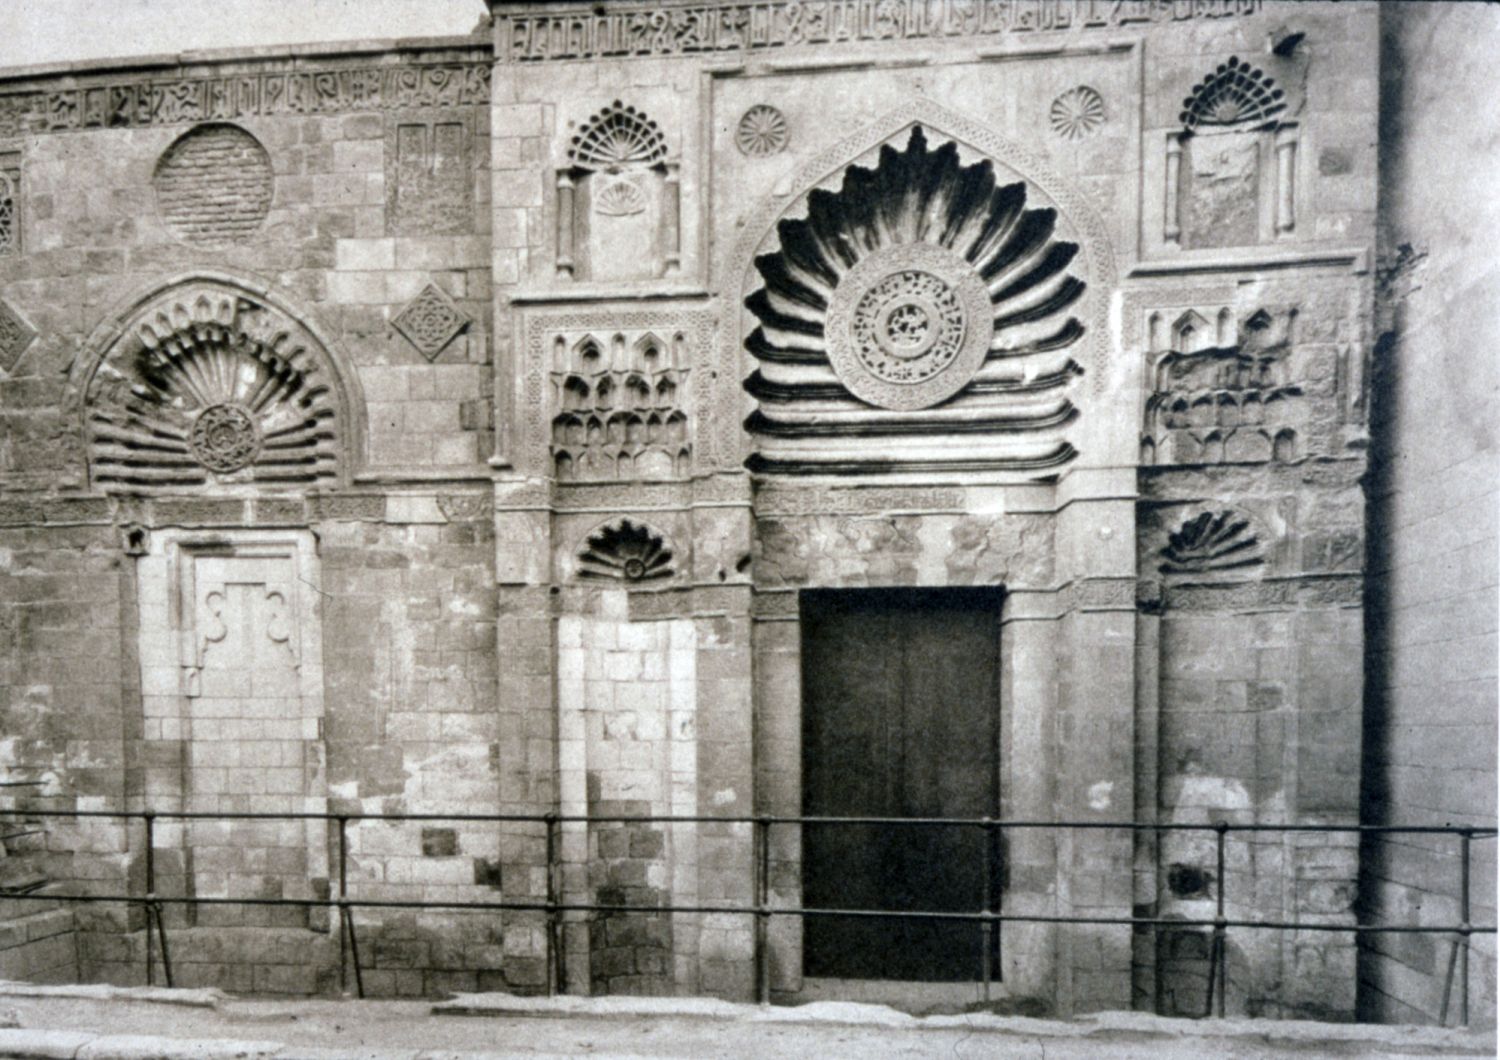 Facade of mosque before restoration.